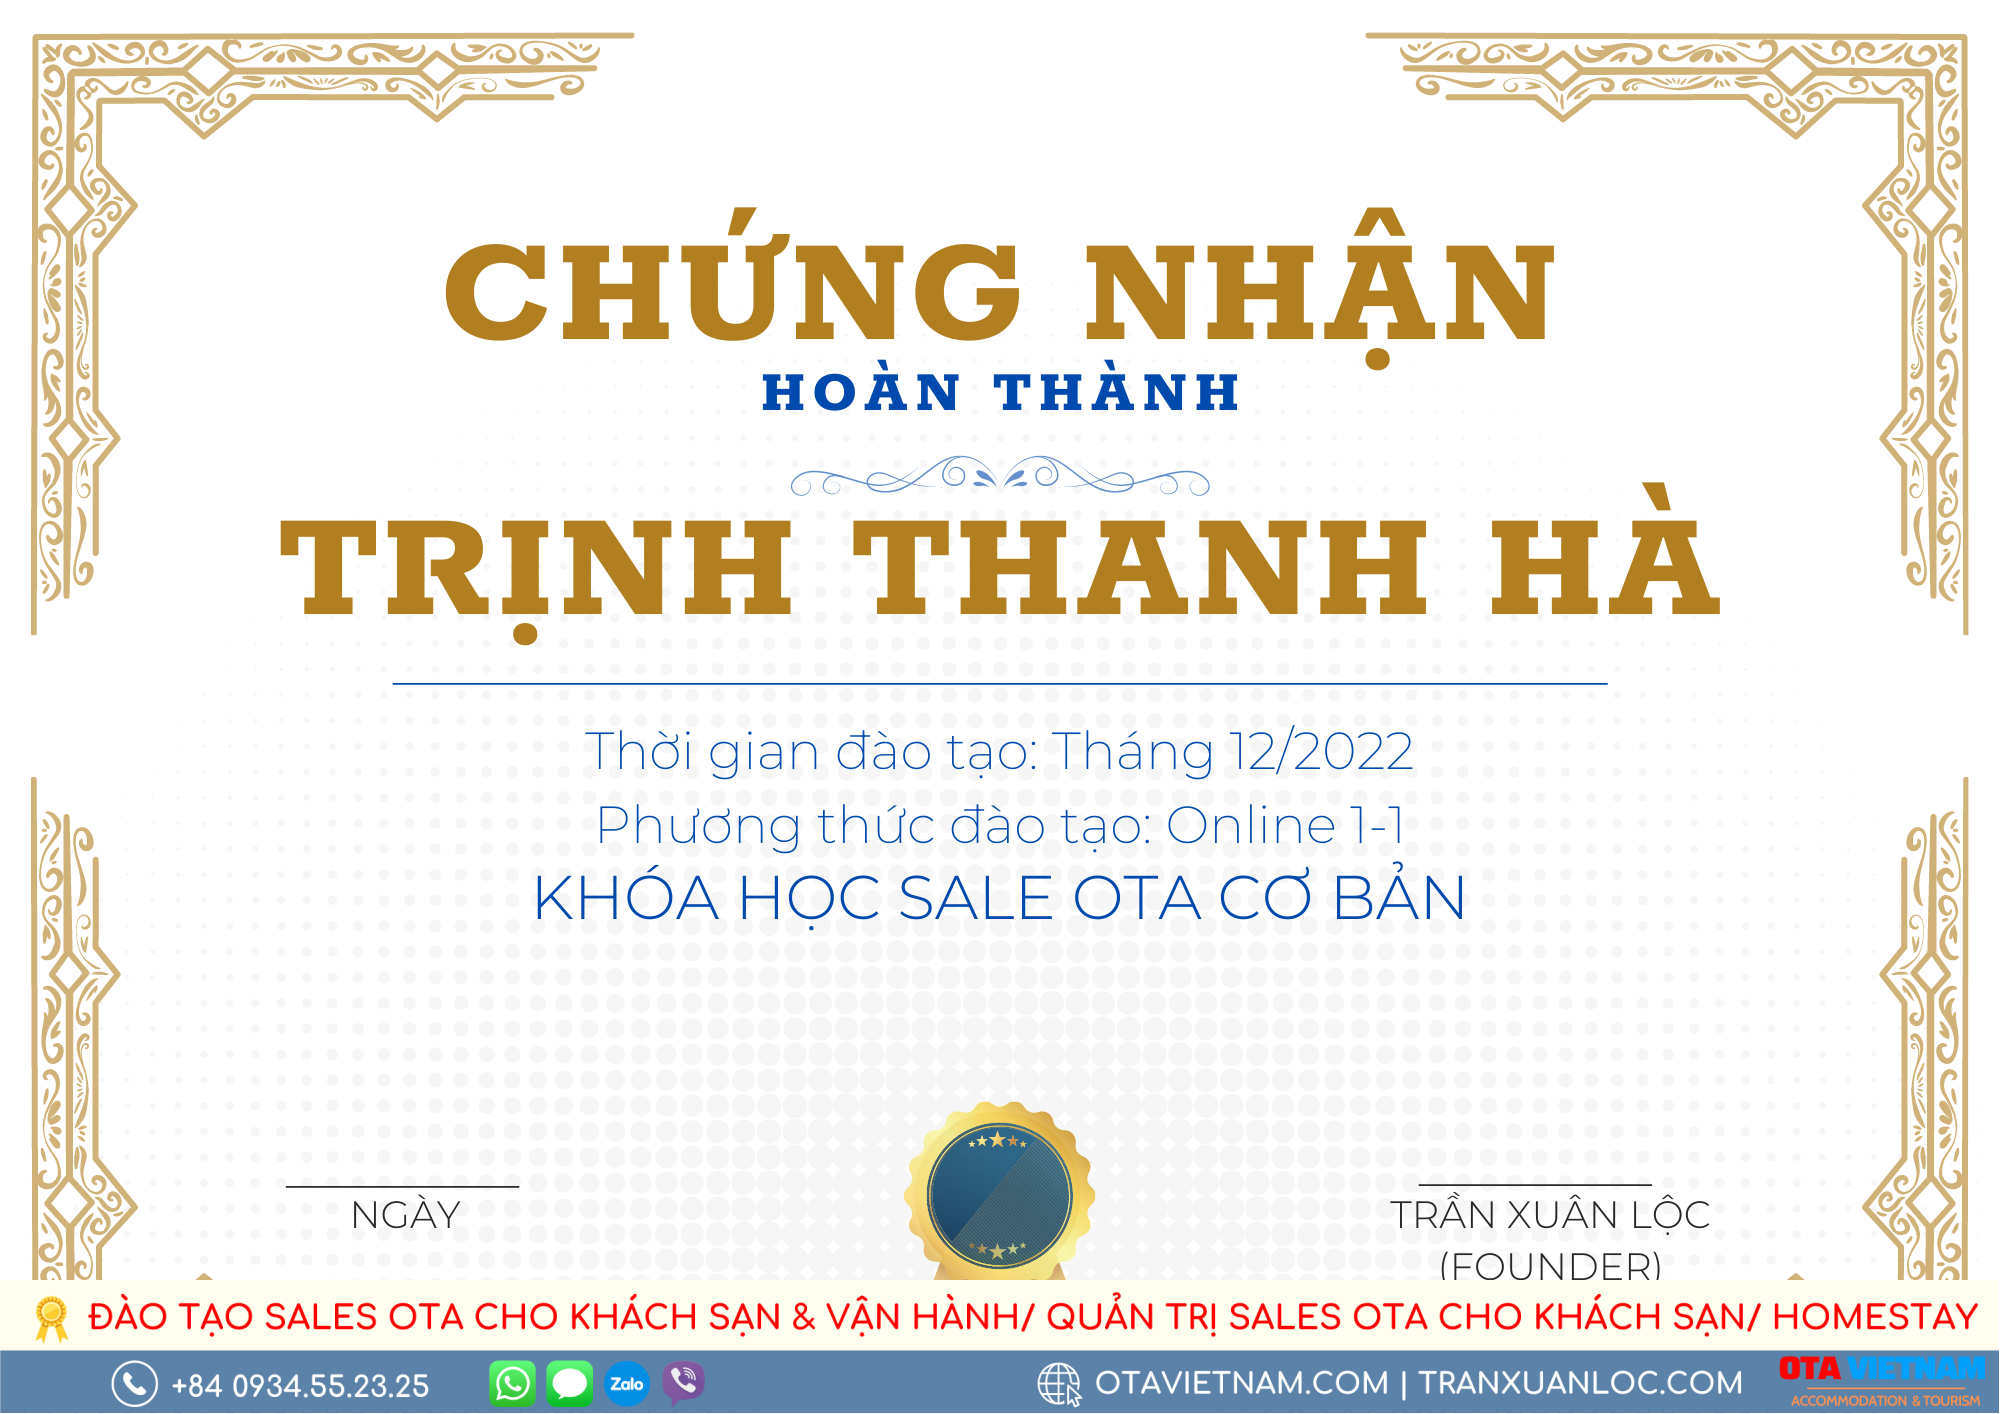 Otavn Chung Nhan Hoan Thanh Khoa Hoc Sale Ota Trinhthanhha